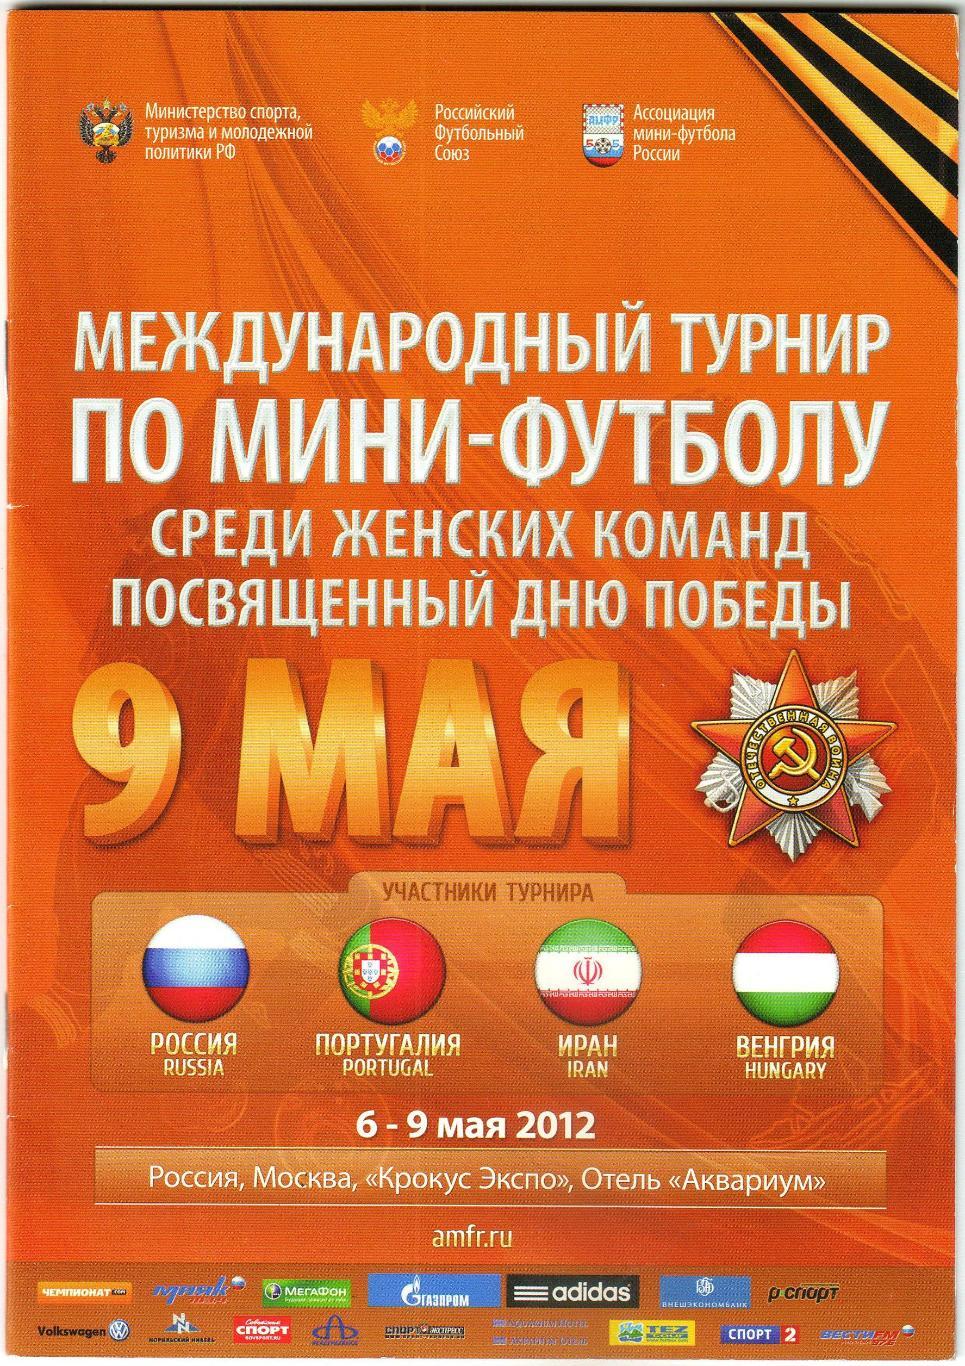 Мини-футбол Турнир женских команд Россия Португалия Иран Венгрия 06-09.05.2012